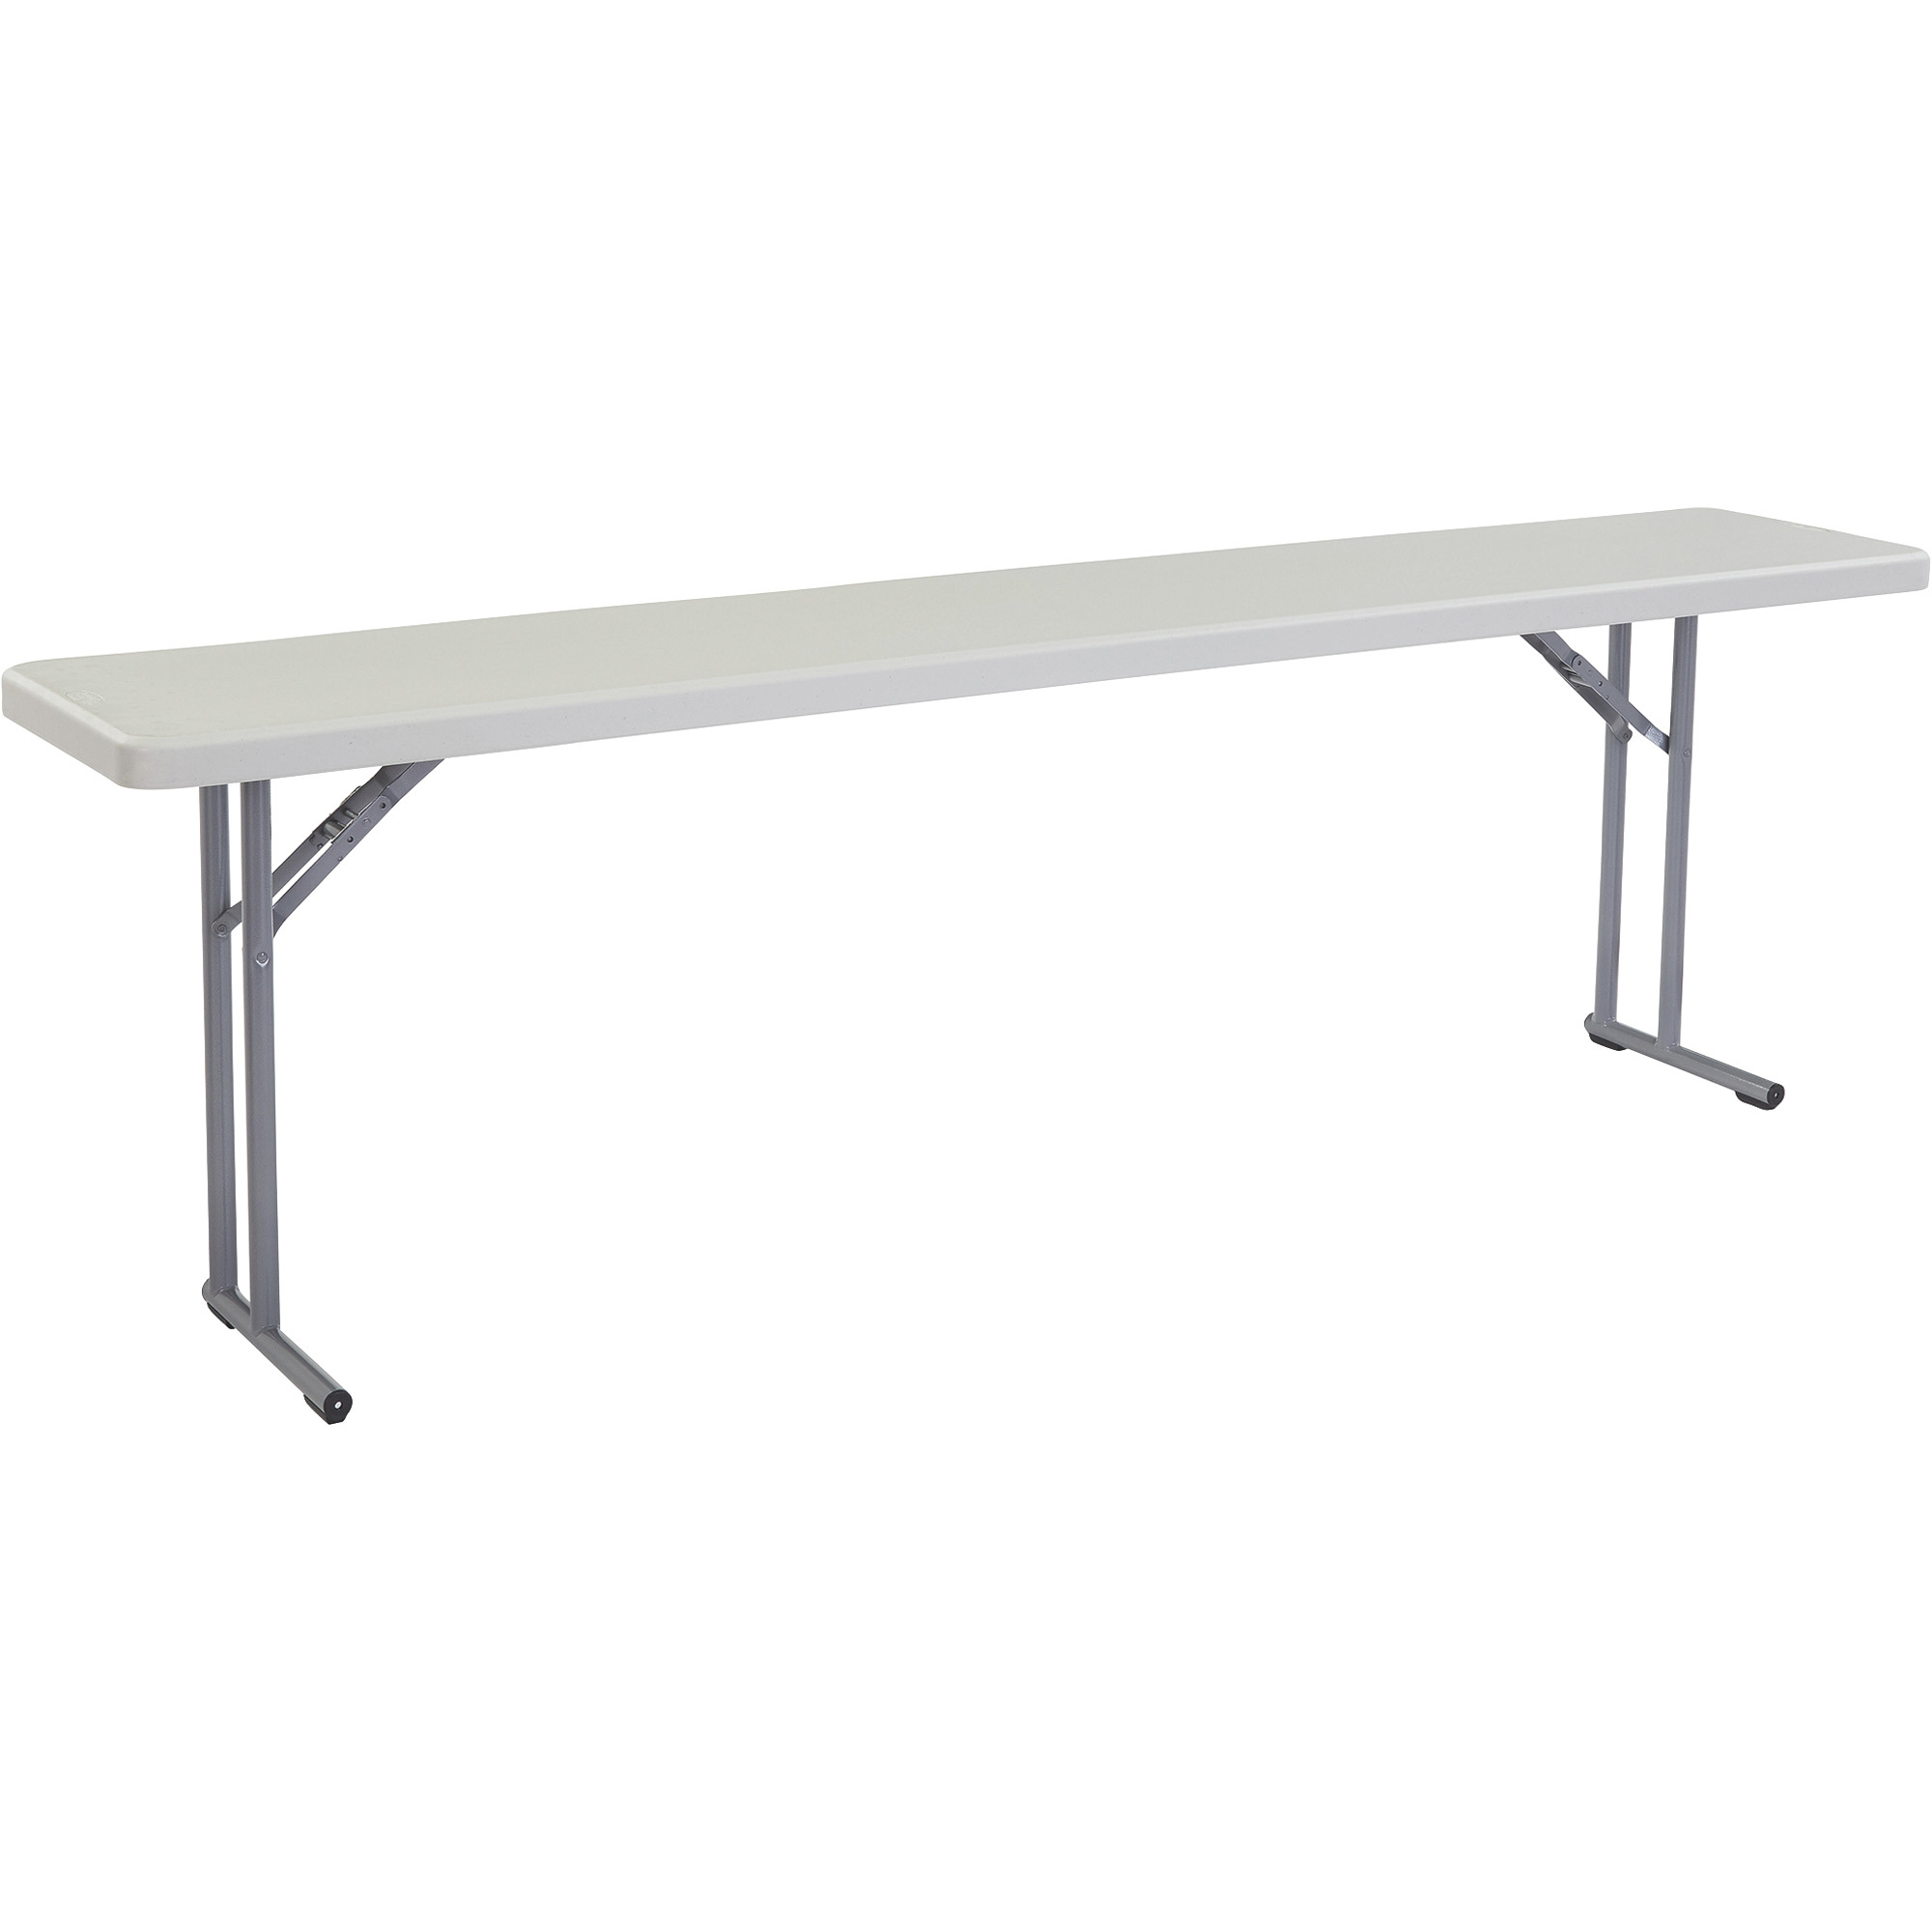 Plastic Folding Table — 18Inch W x 96Inch L, Model - National Public Seating BT1896